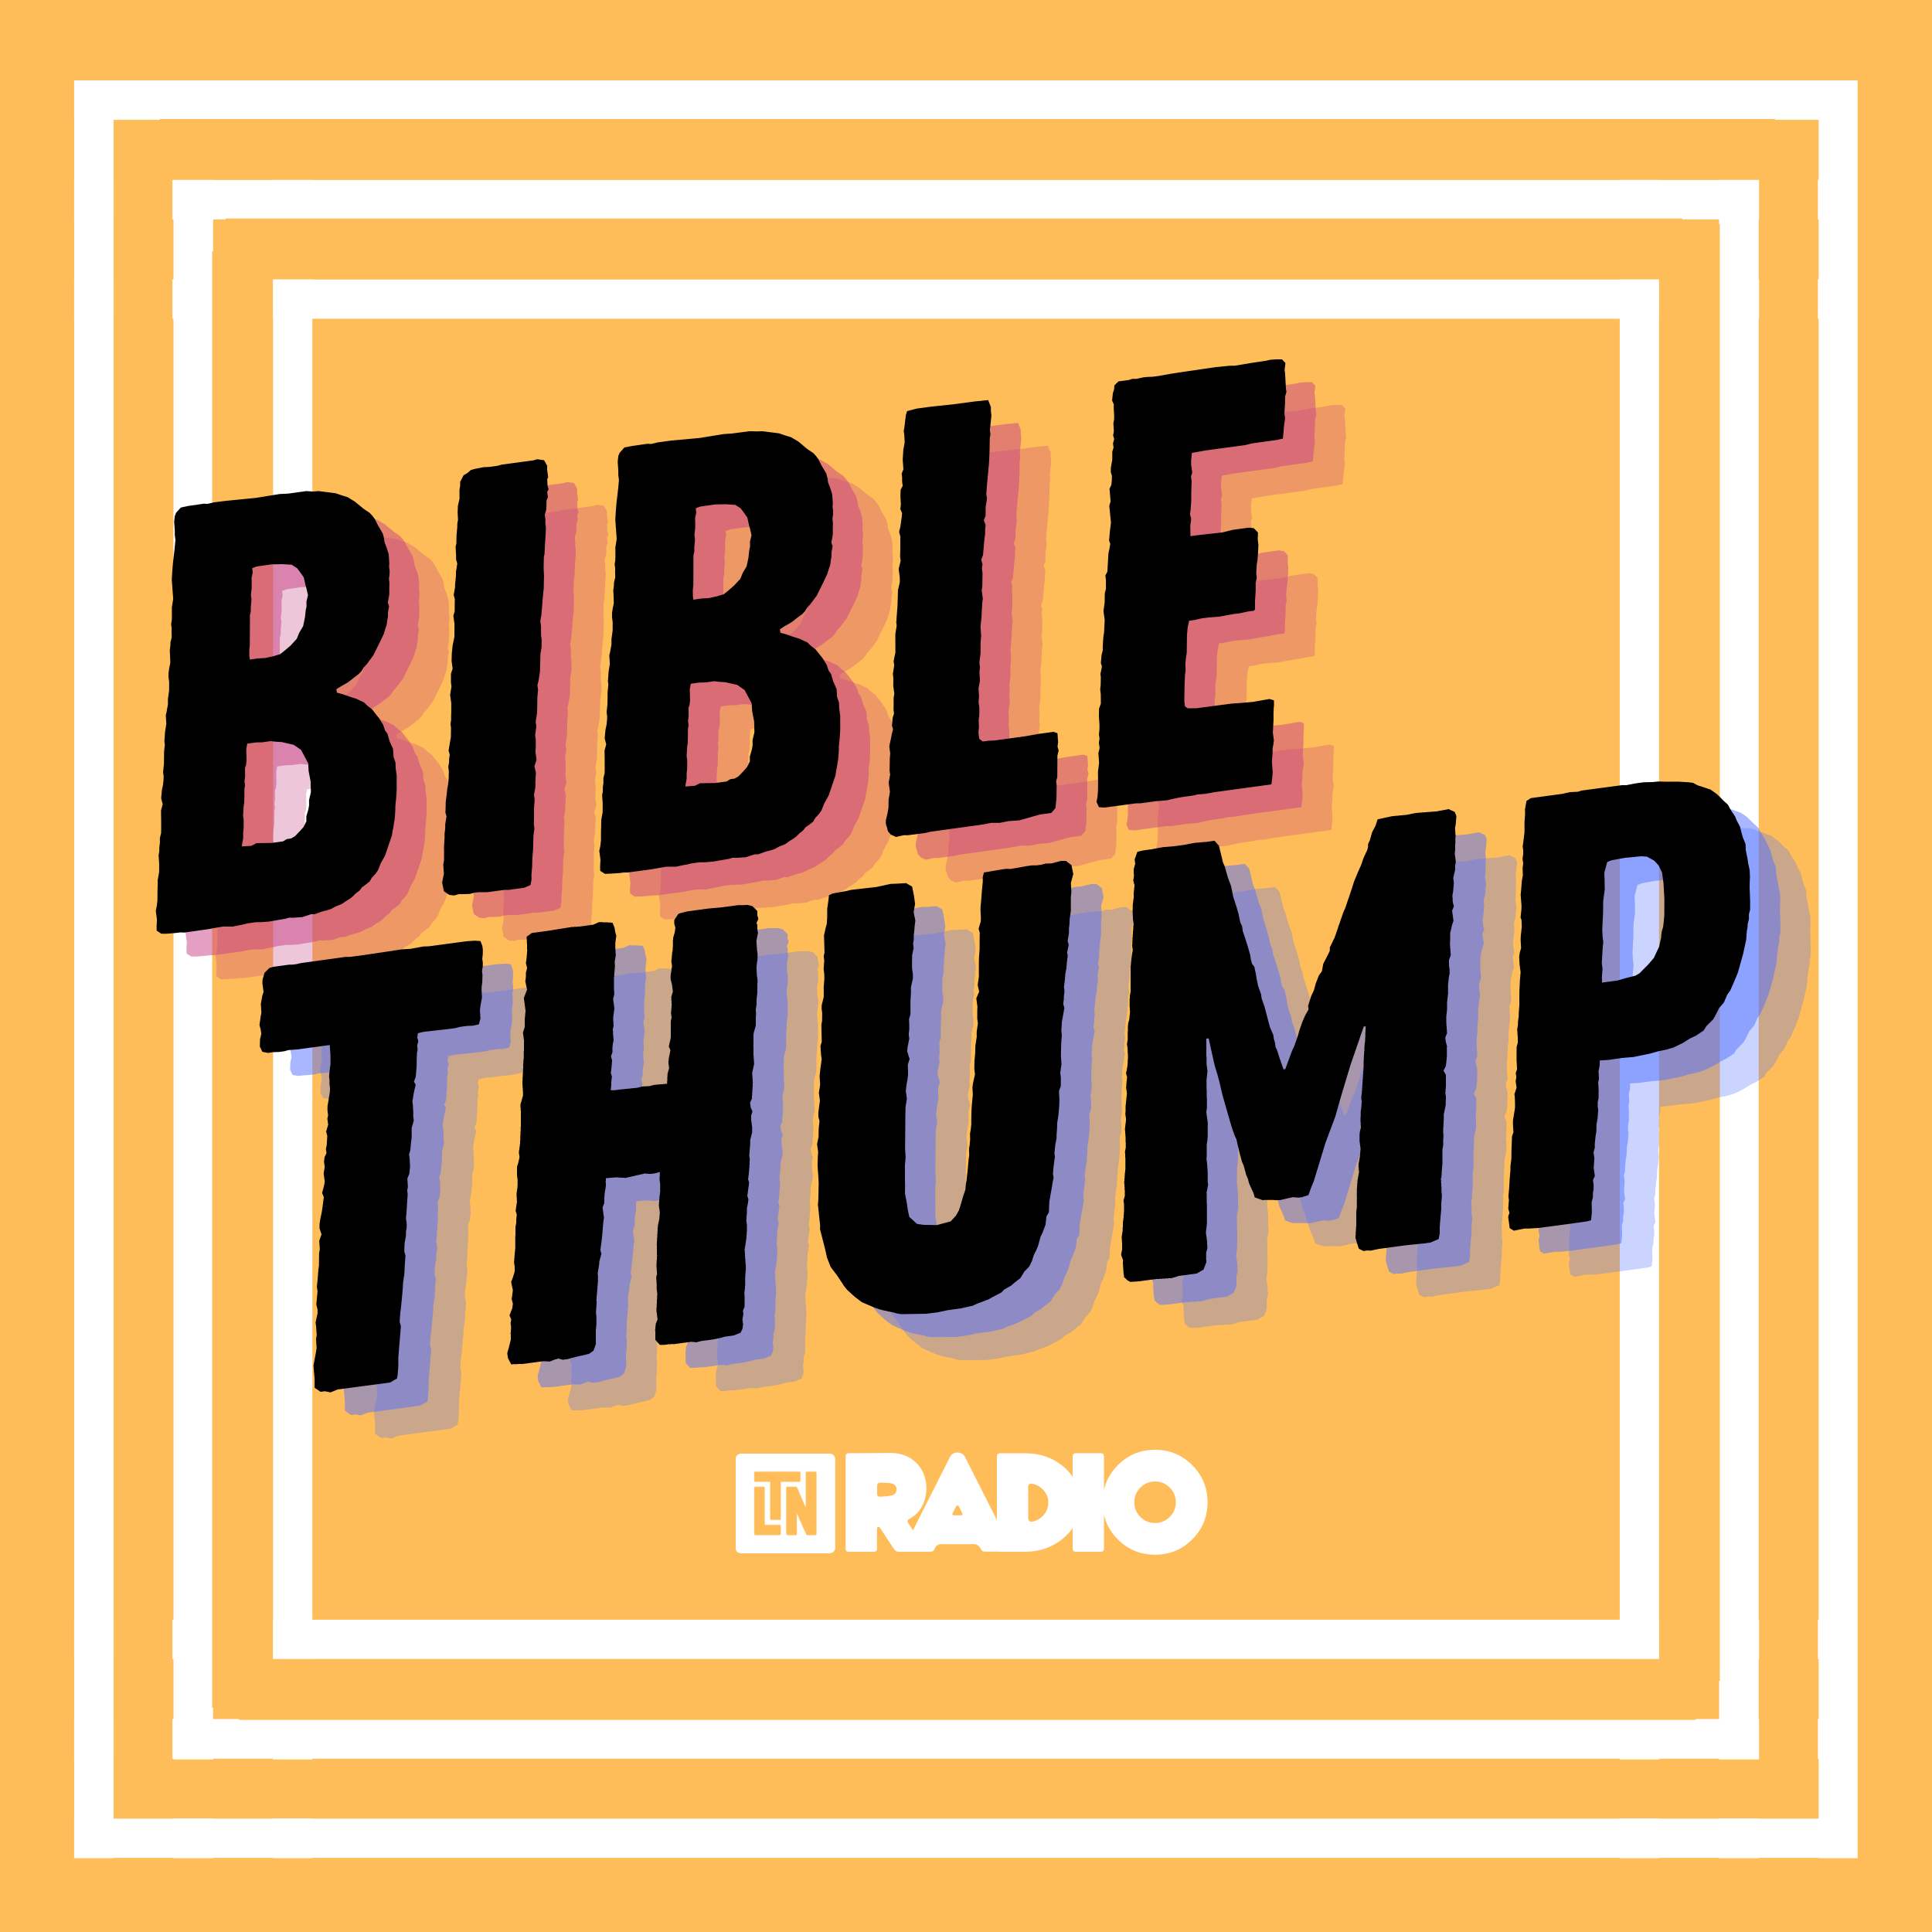 Bible Thump 19 | New Wine